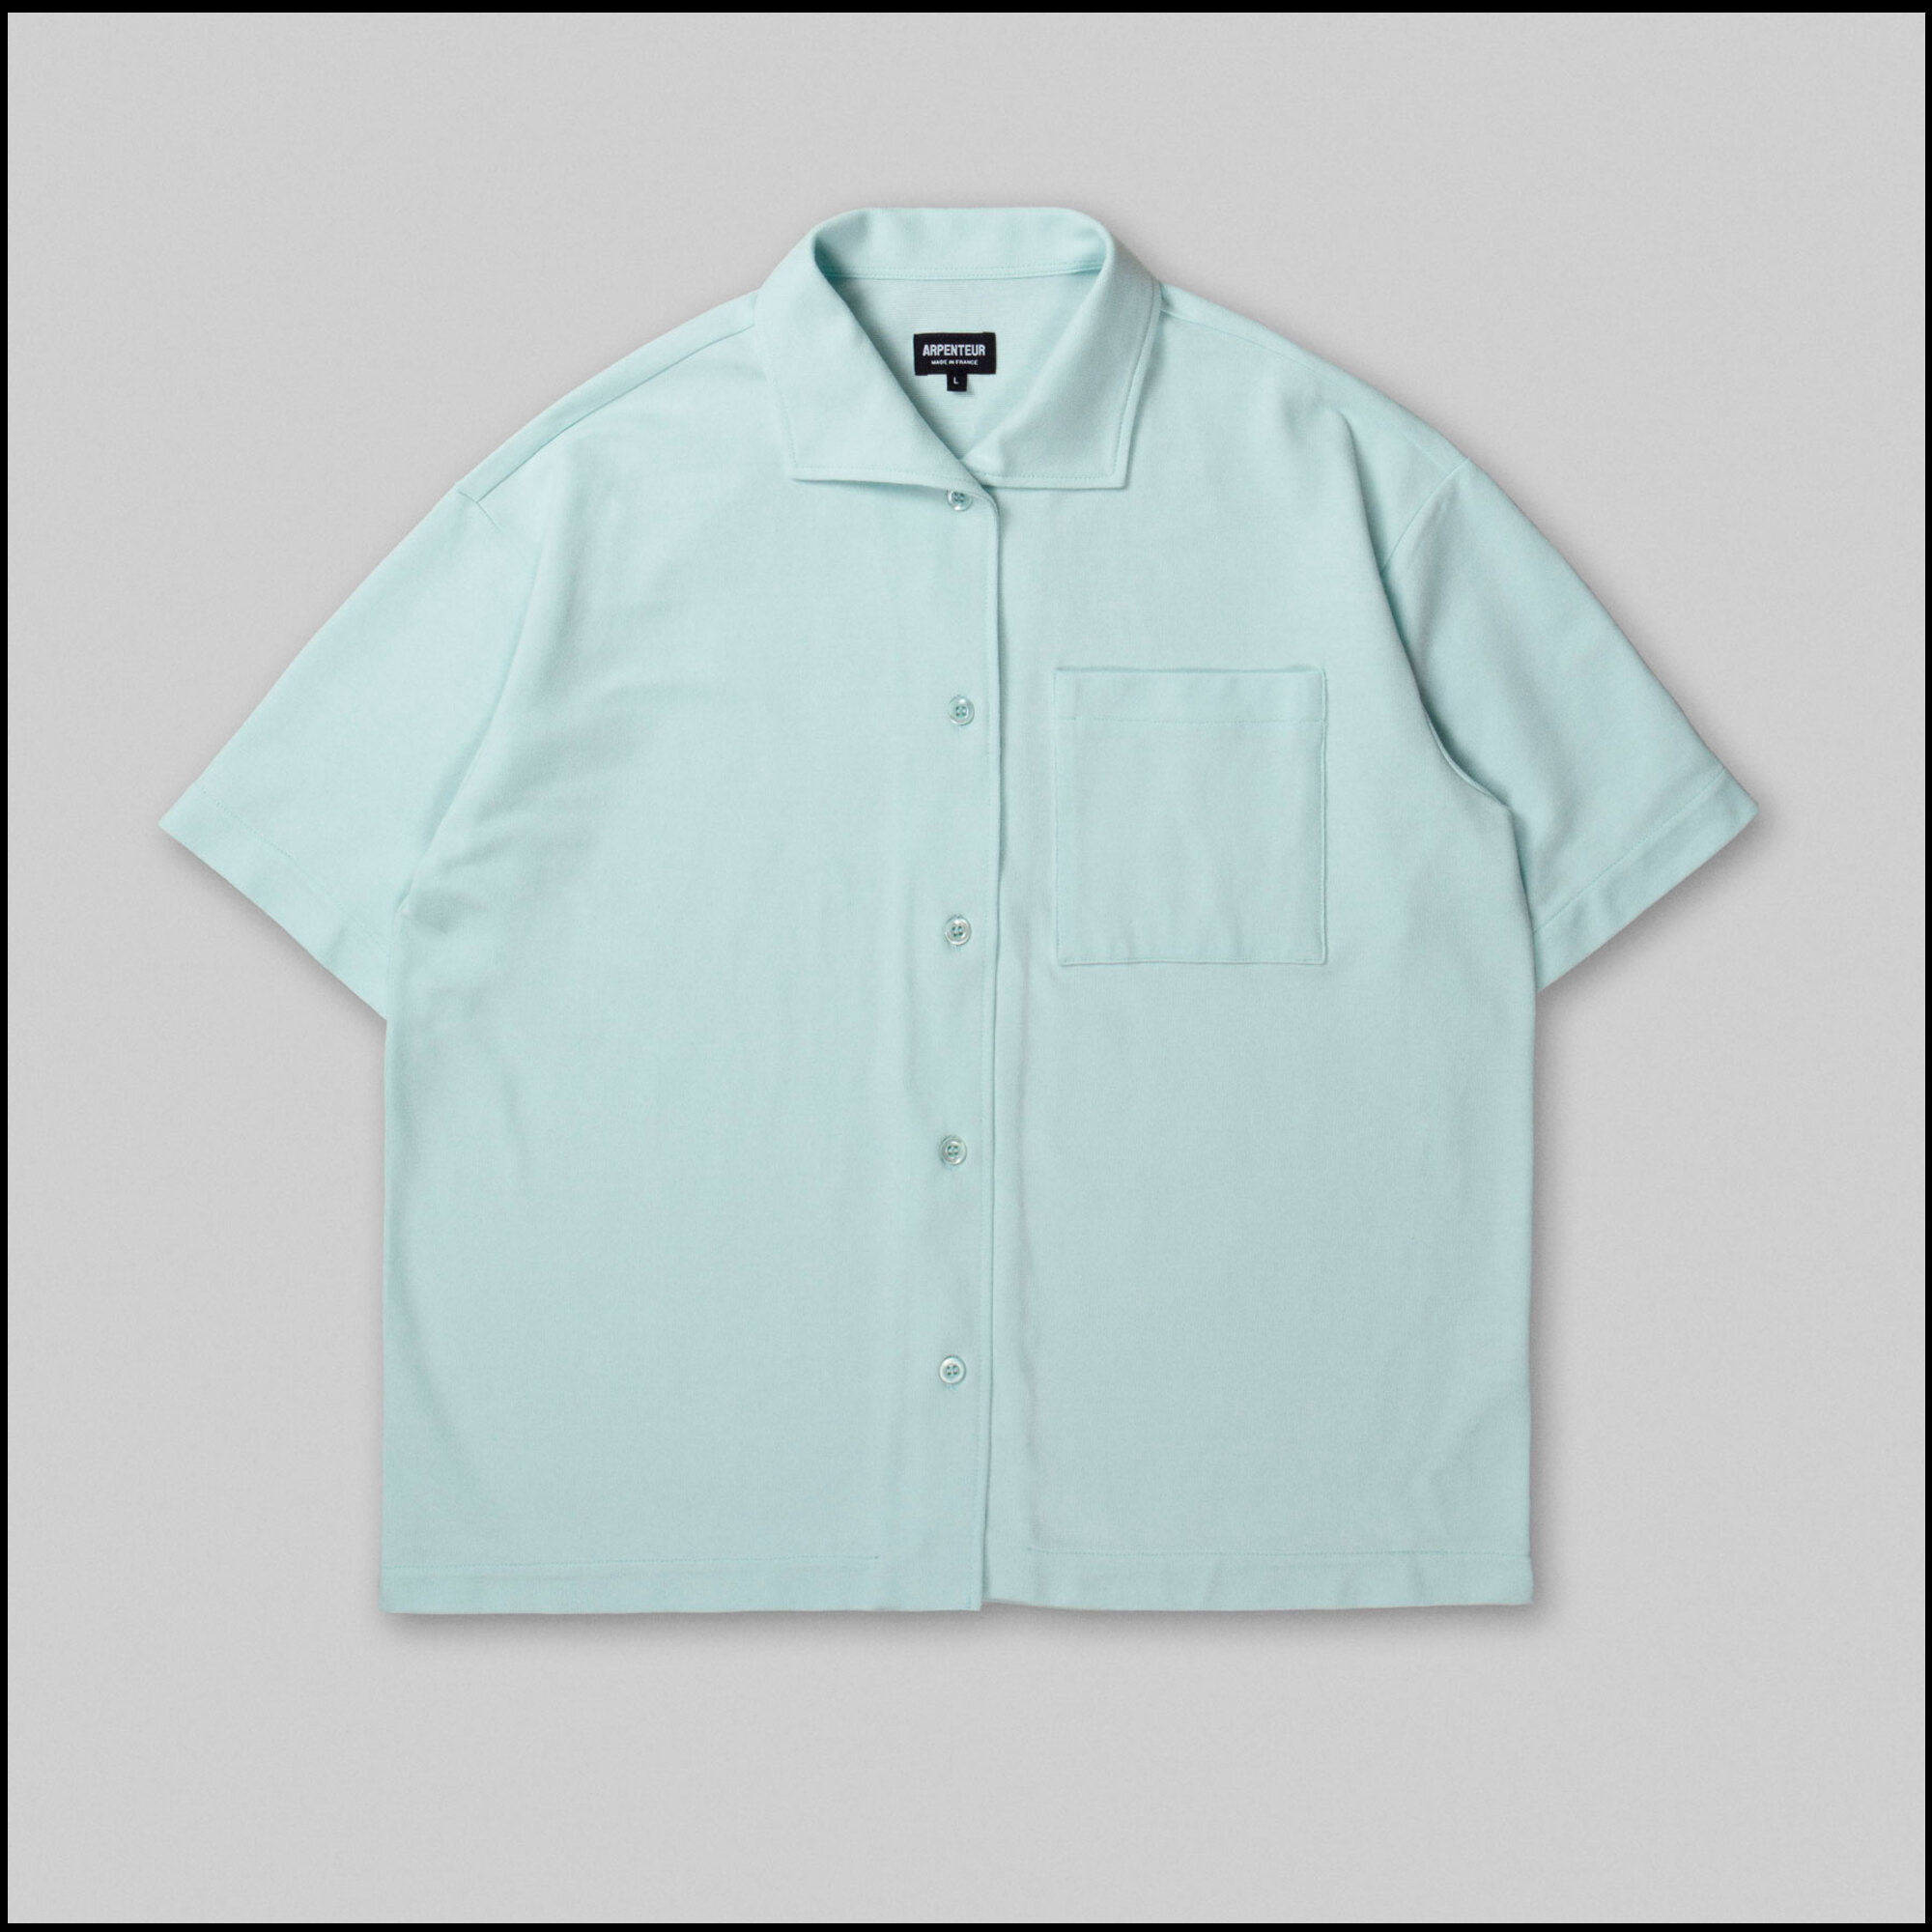 CORAL short sleeve shirt by Arpenteur in Pale cloud color